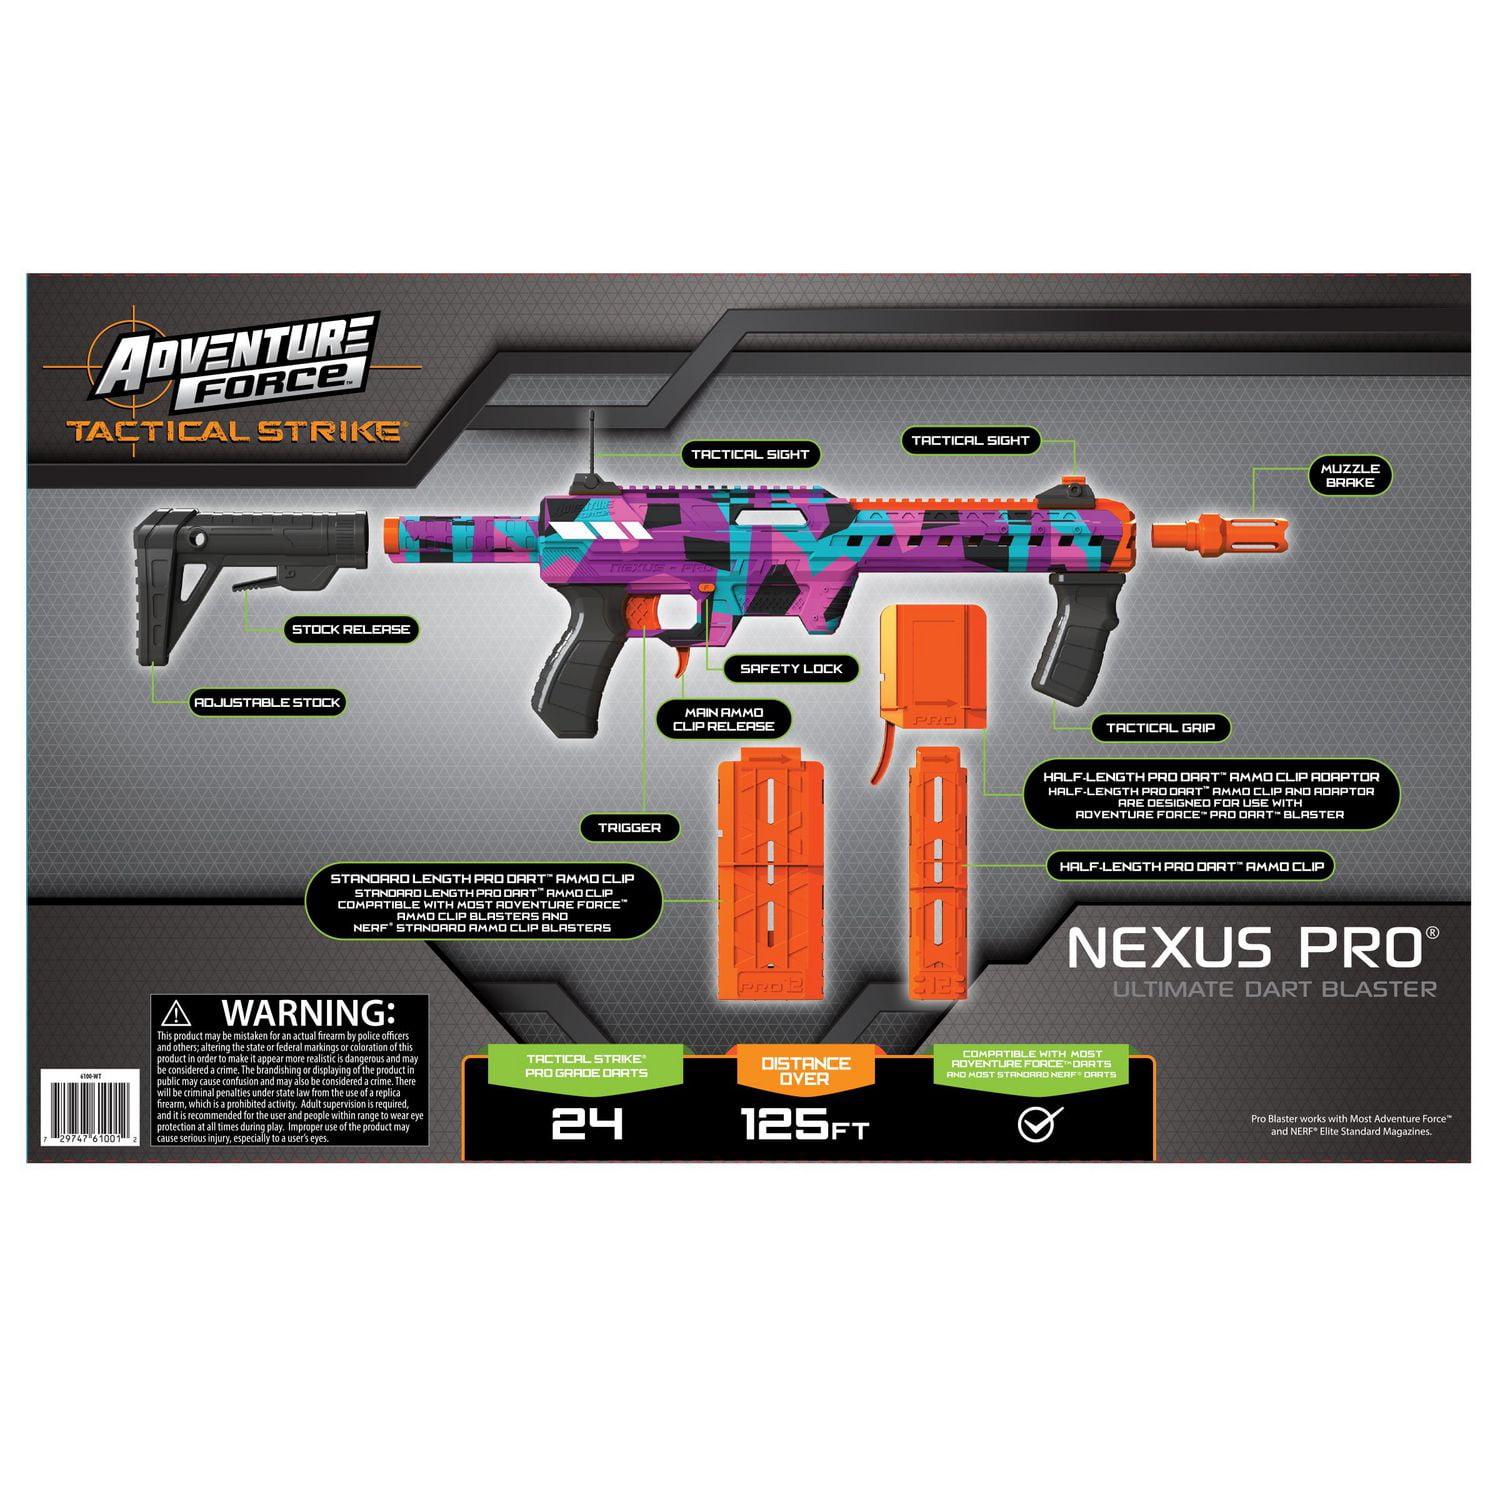 Adventure Force Tactical Strike Nexus Pro Ultimate Dart Blaster